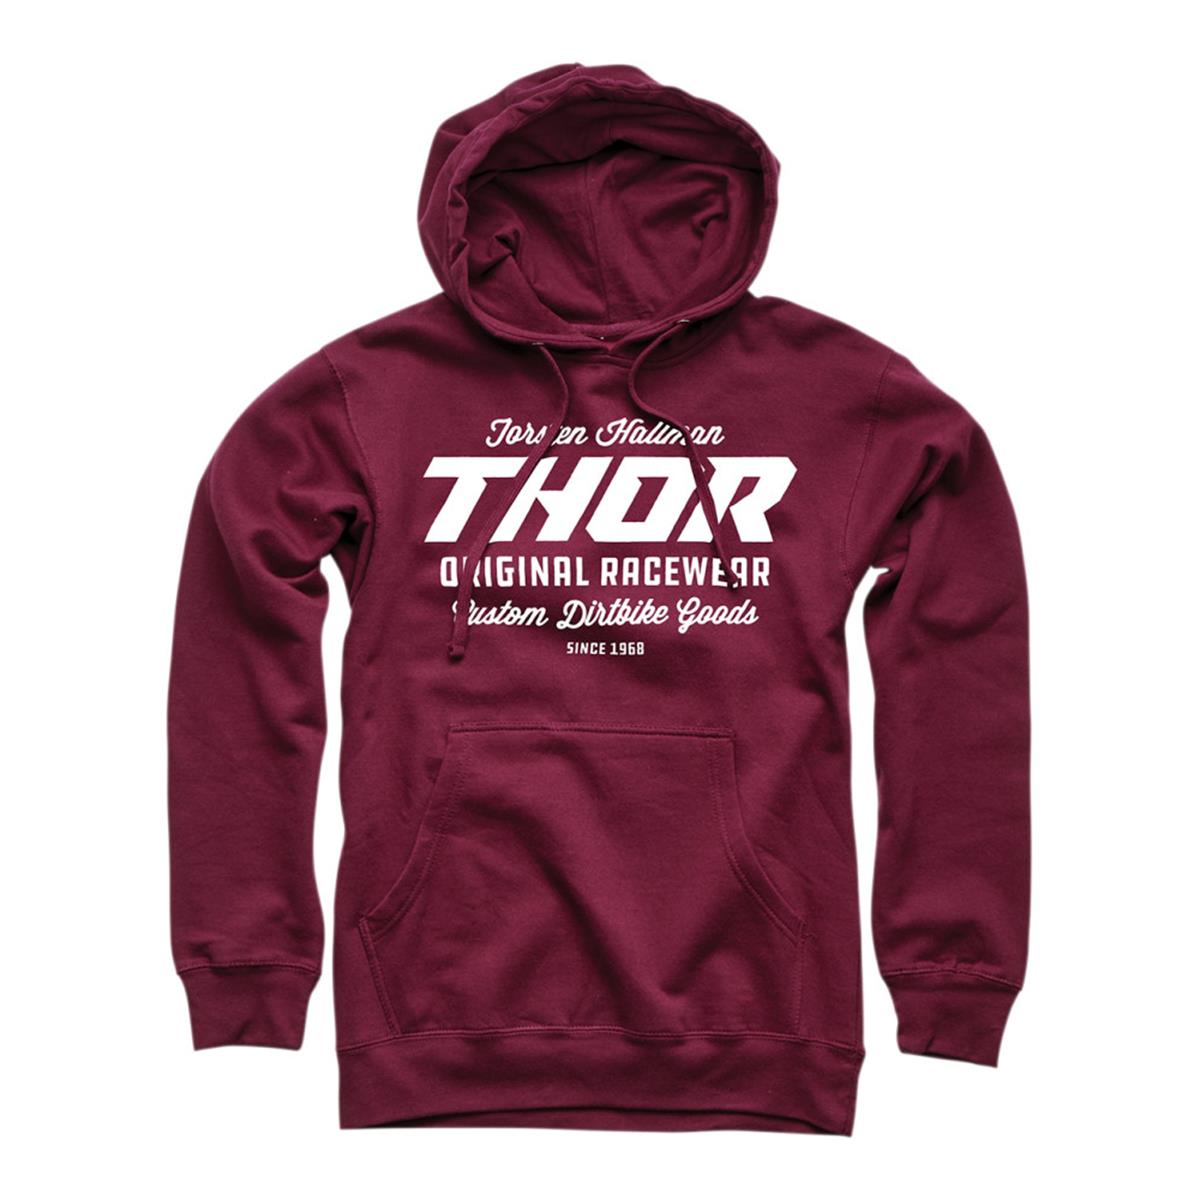 Thor Sweat The Goods Maroon